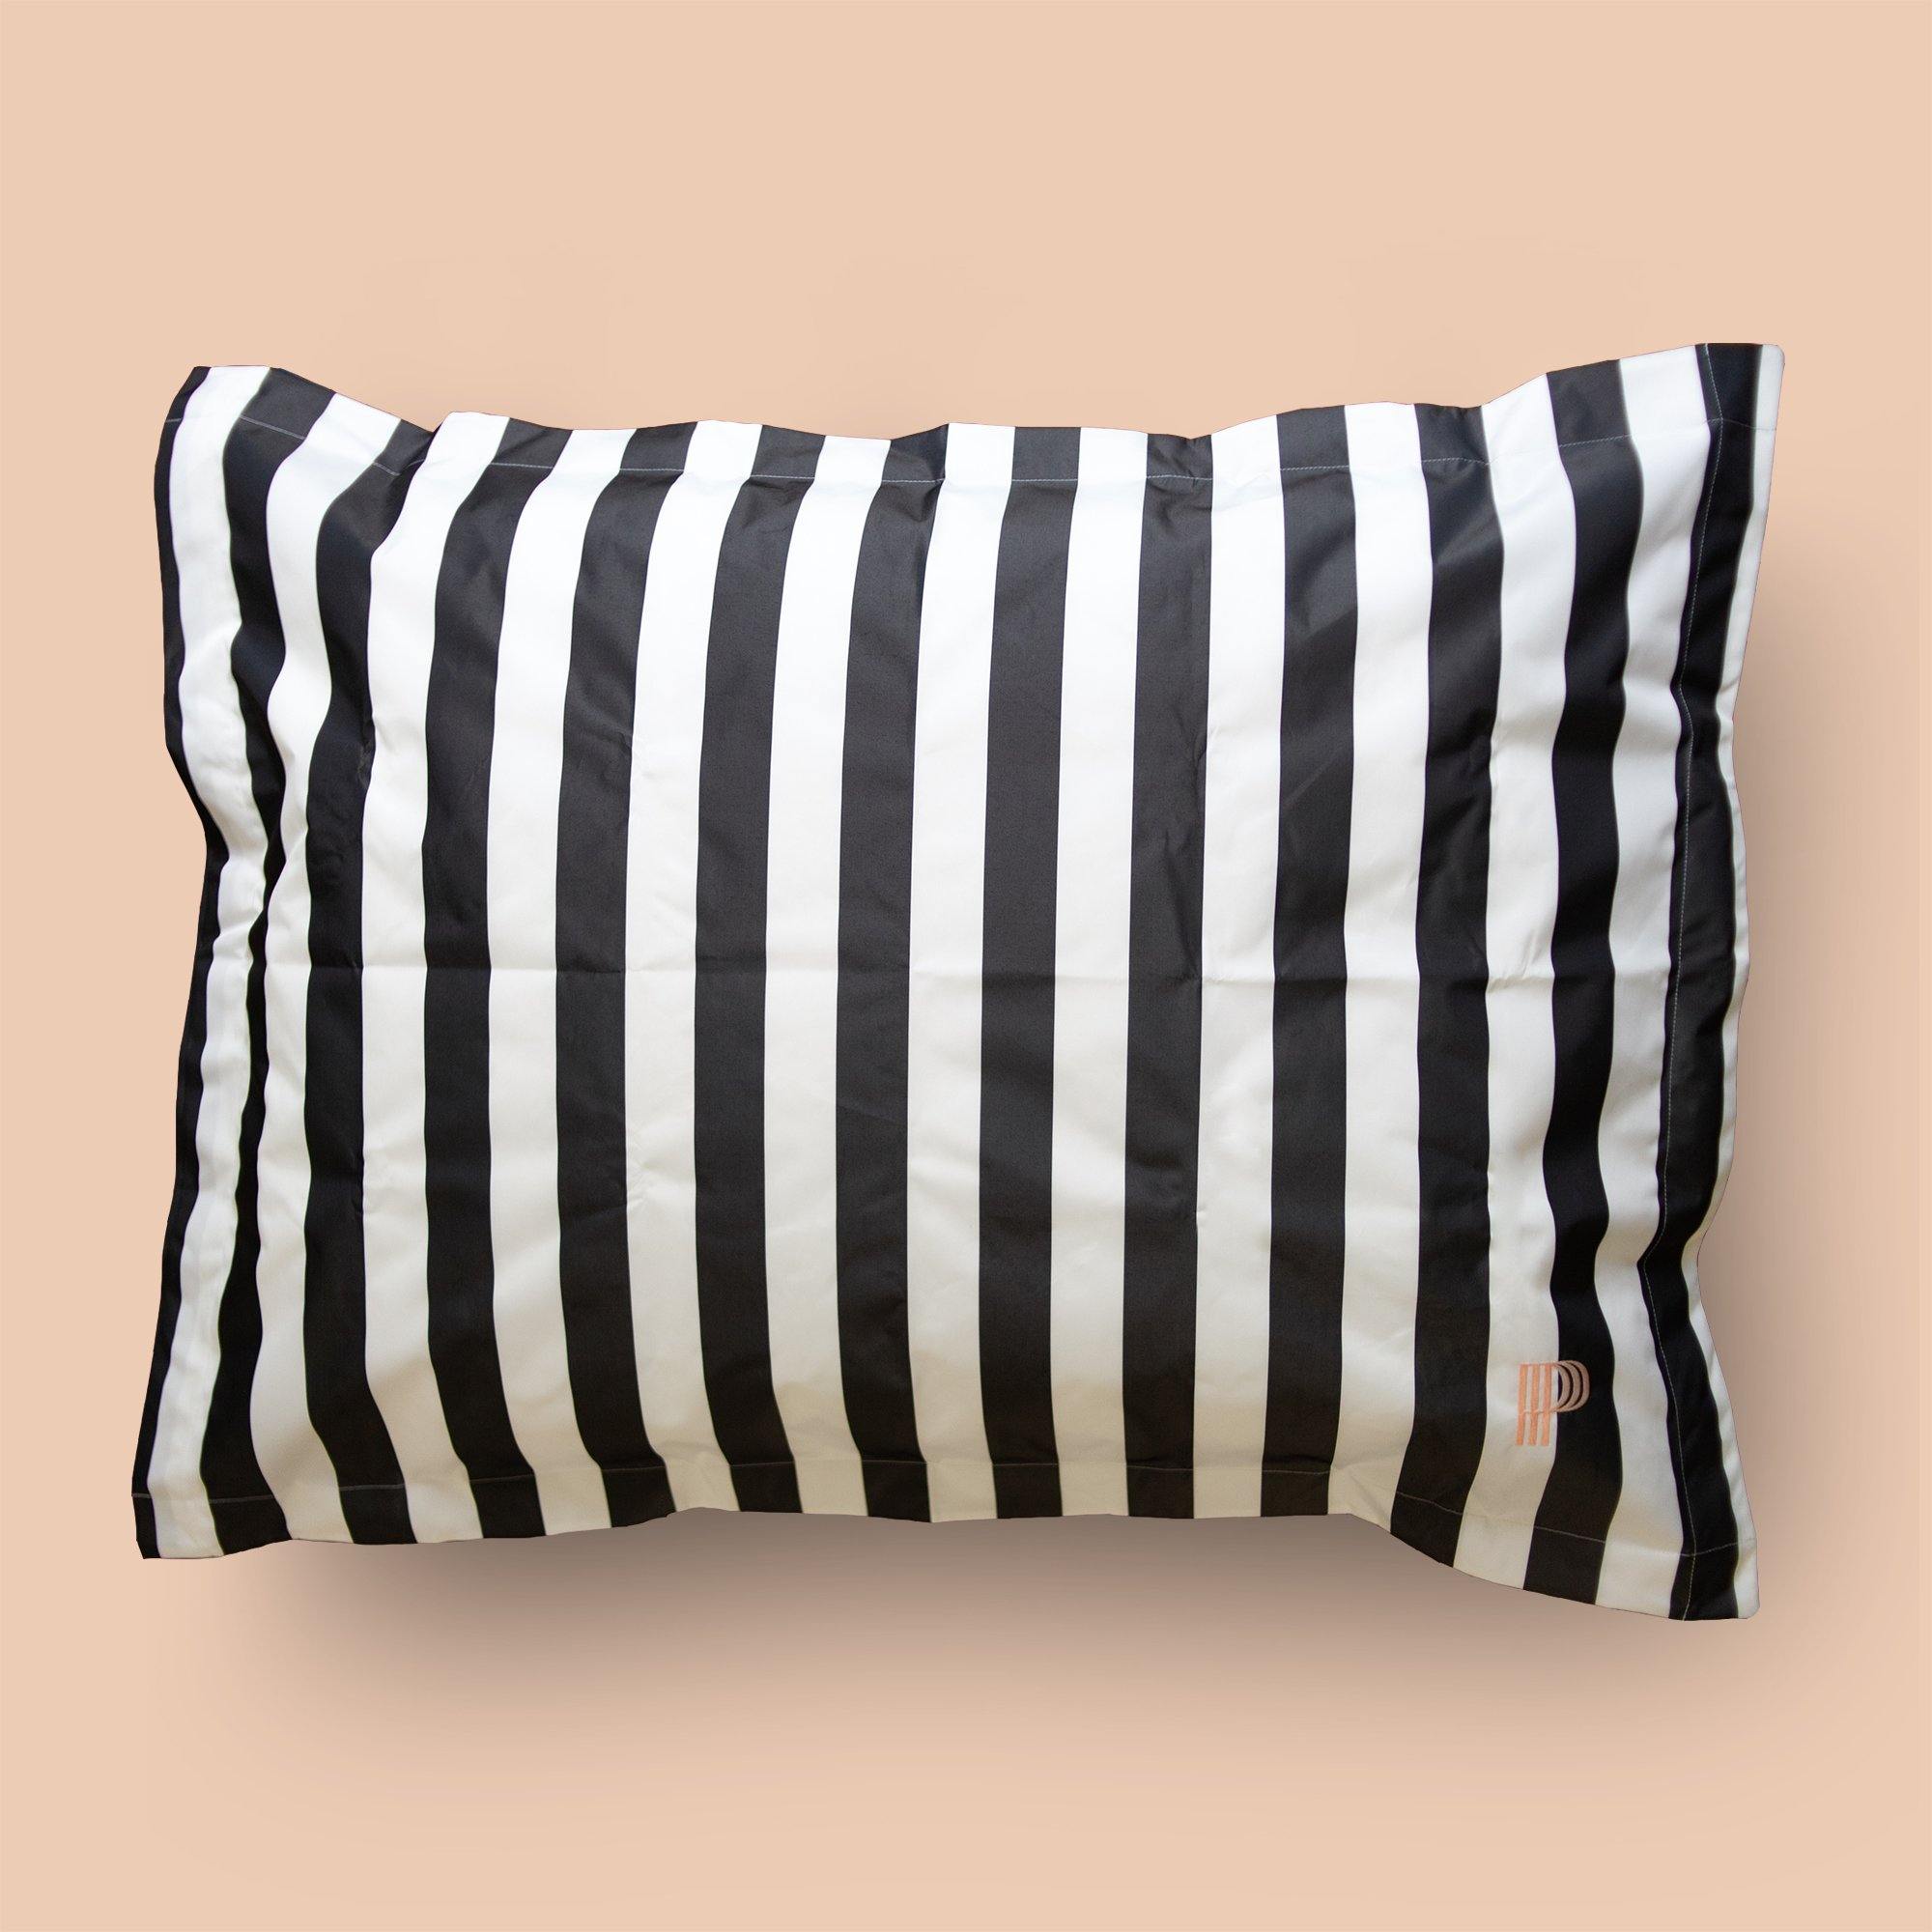 Stripes - Pool Pillow Luxury Float - Posh Pool Pillow